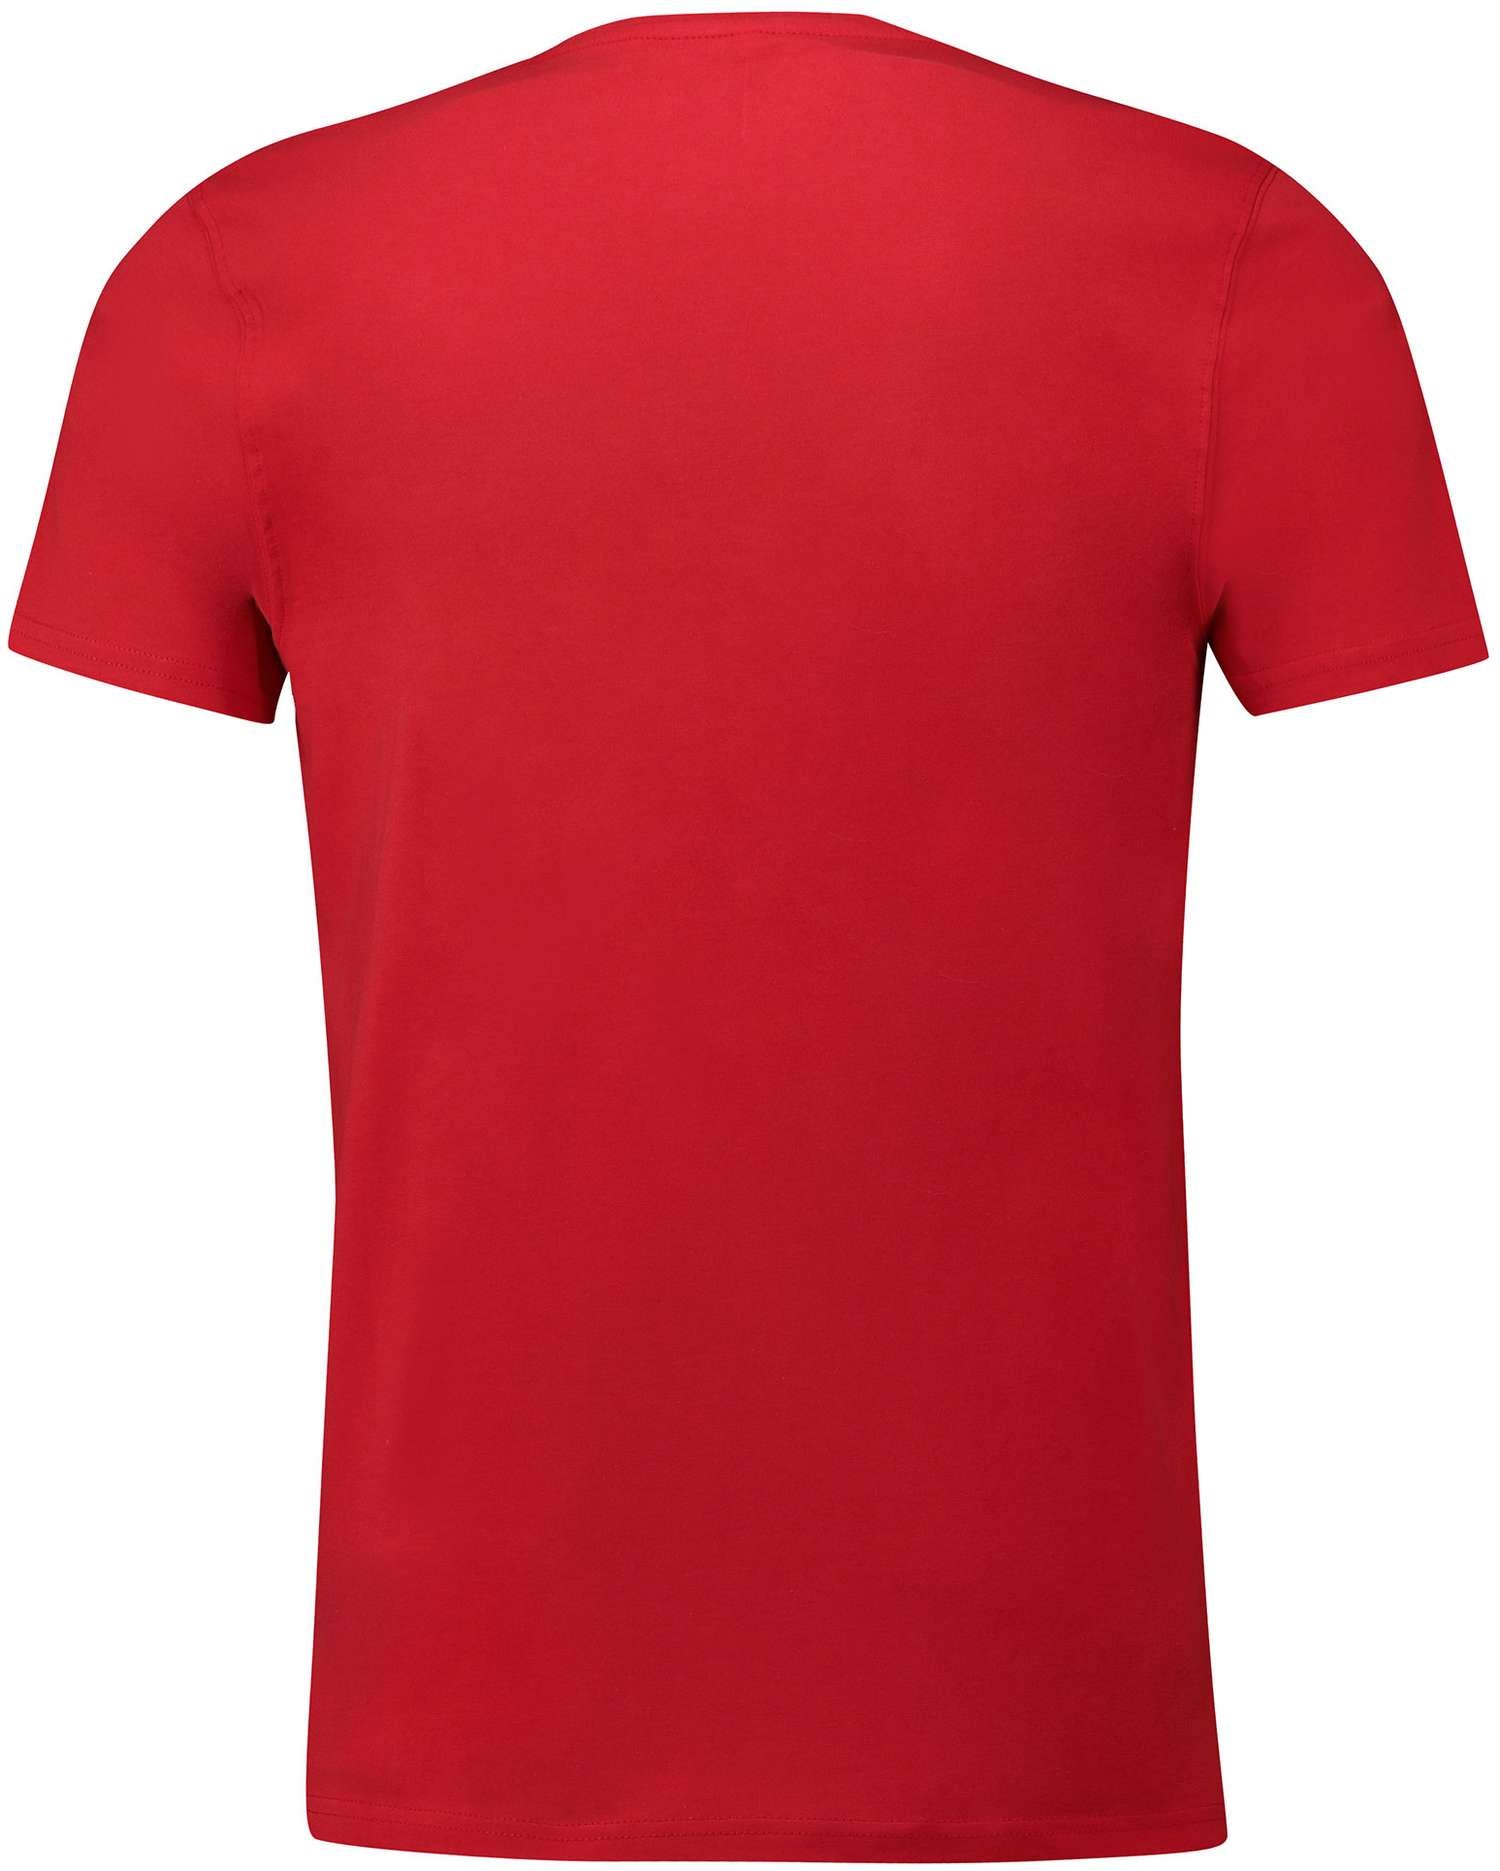 Fanatics - NHL Washington Capitals Primary Core Graphic T-Shirt - Rot